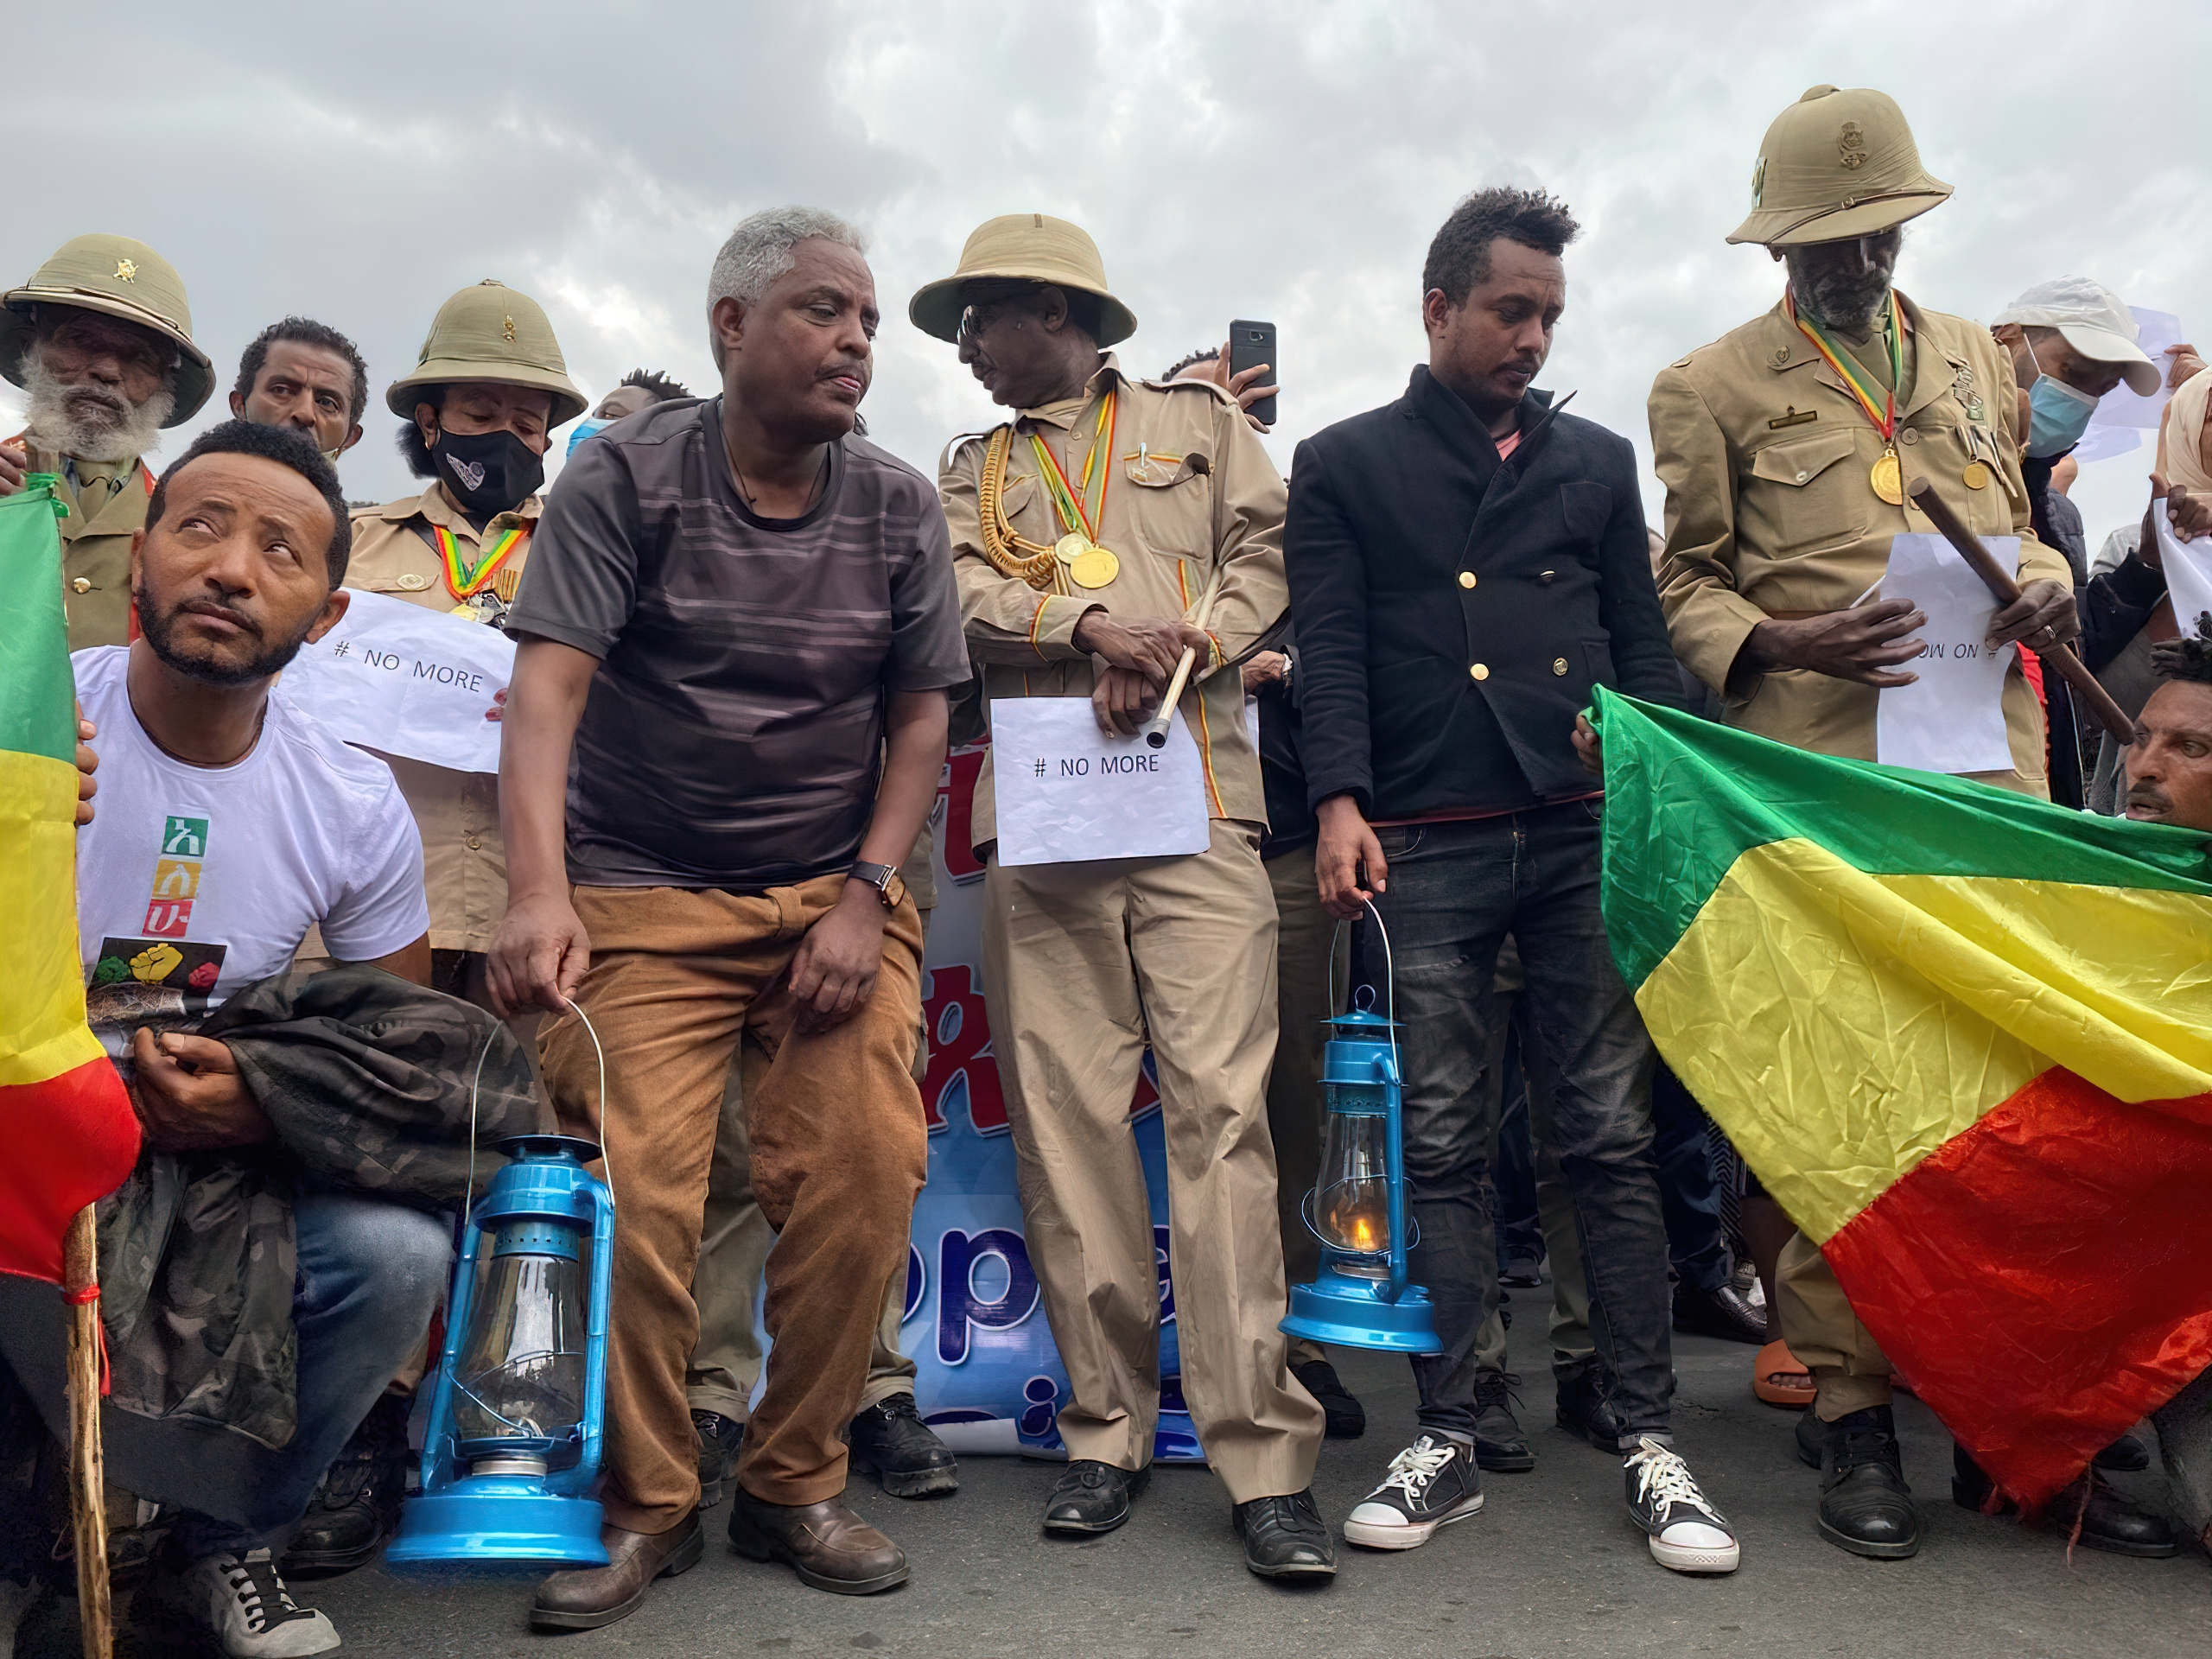 KILLING UNARMED ETHIOPIANS